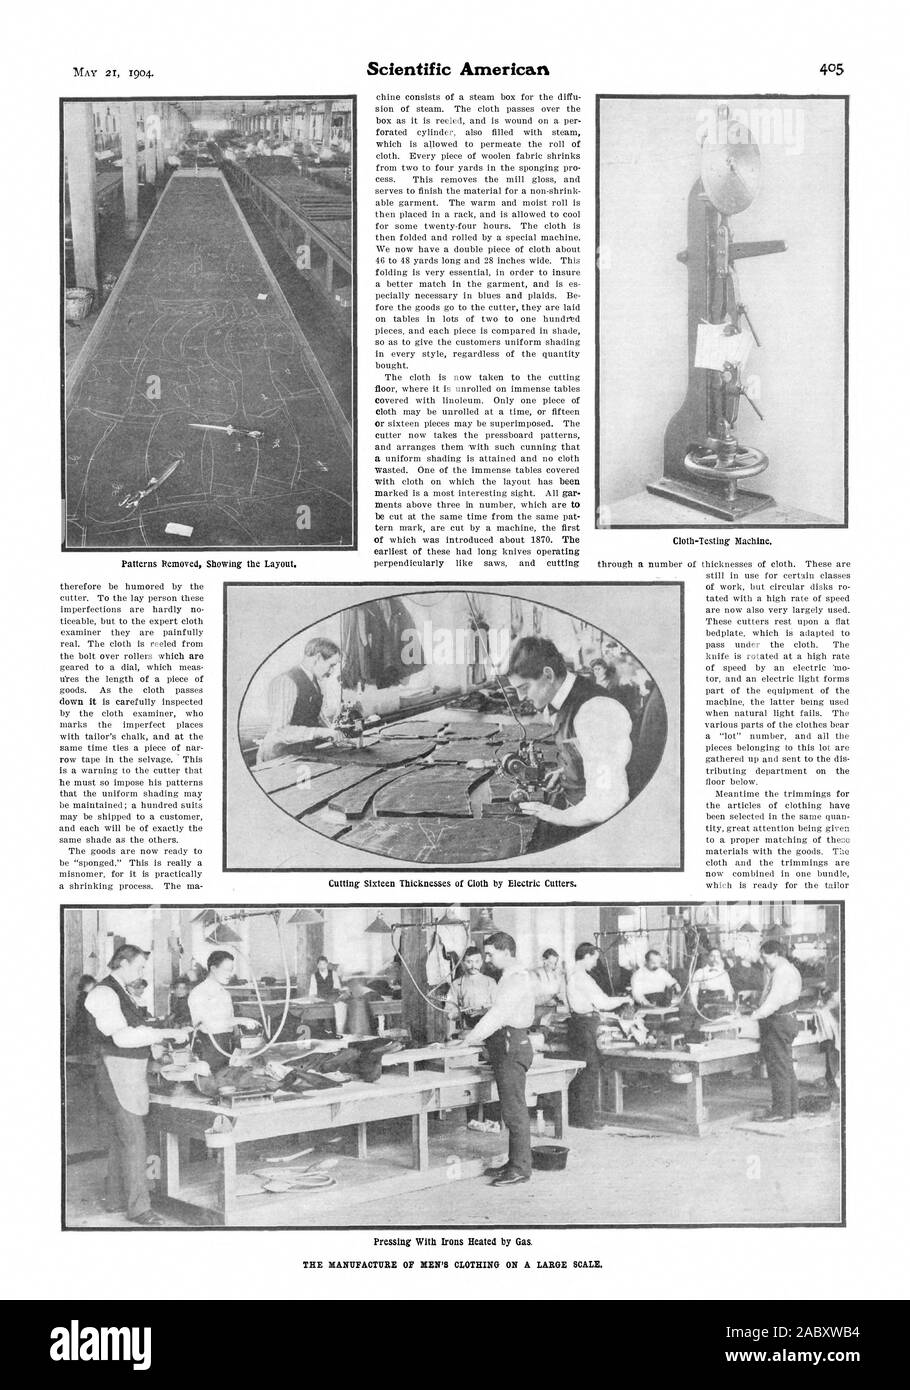 Scientific American, 1904-05-21 Foto de stock